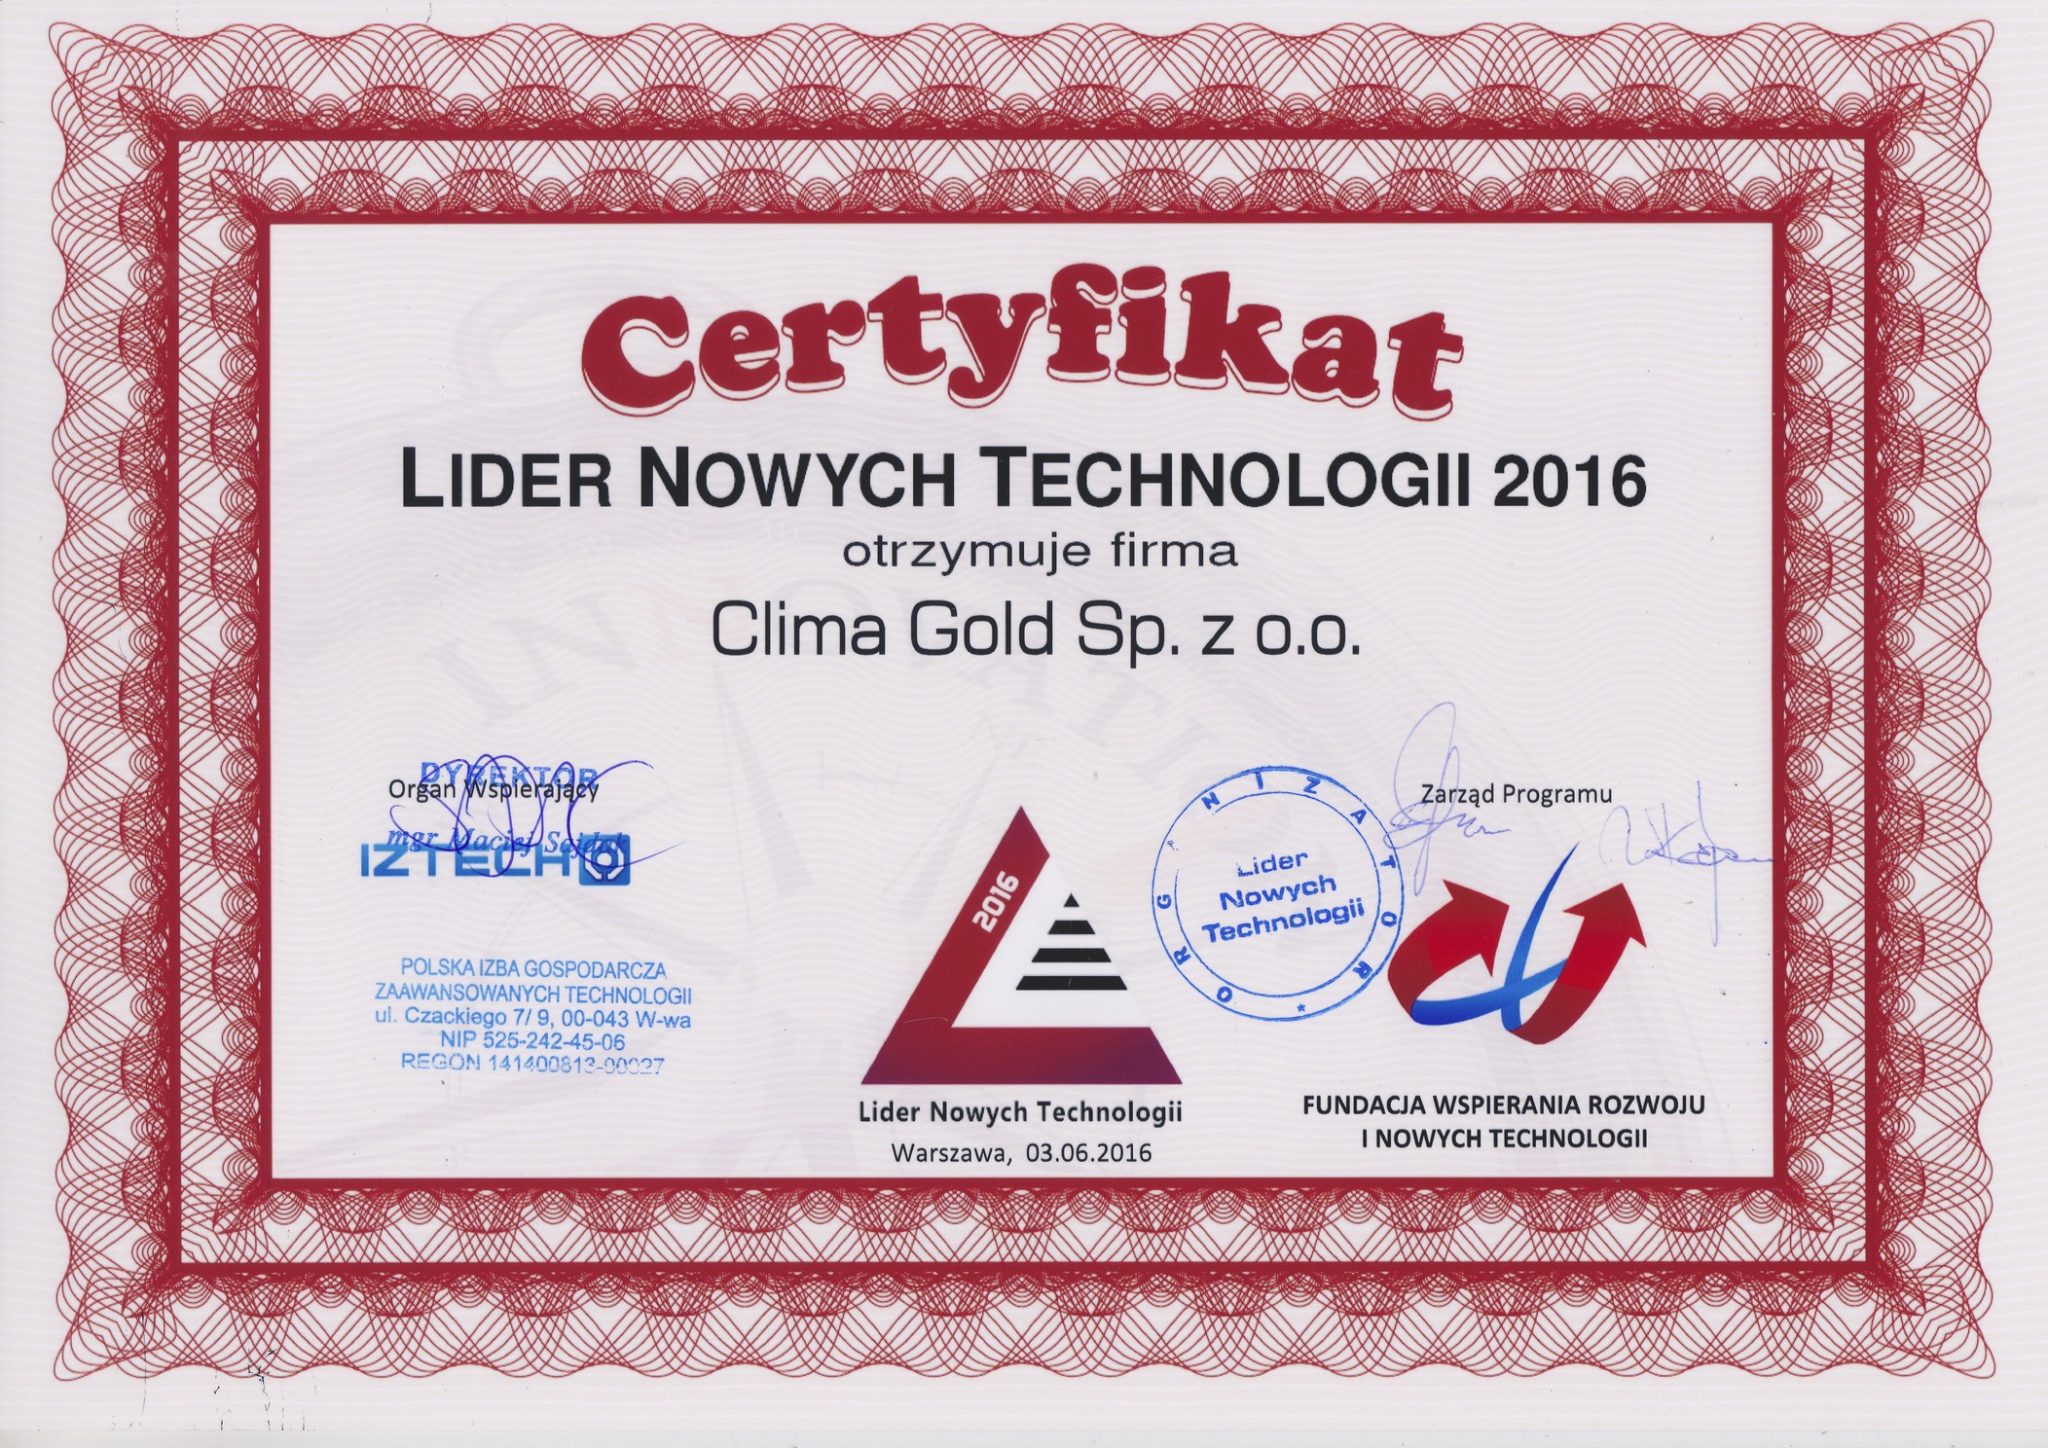 Lider Nowych Technologii 2016 – nagroda dla Clima Gold!